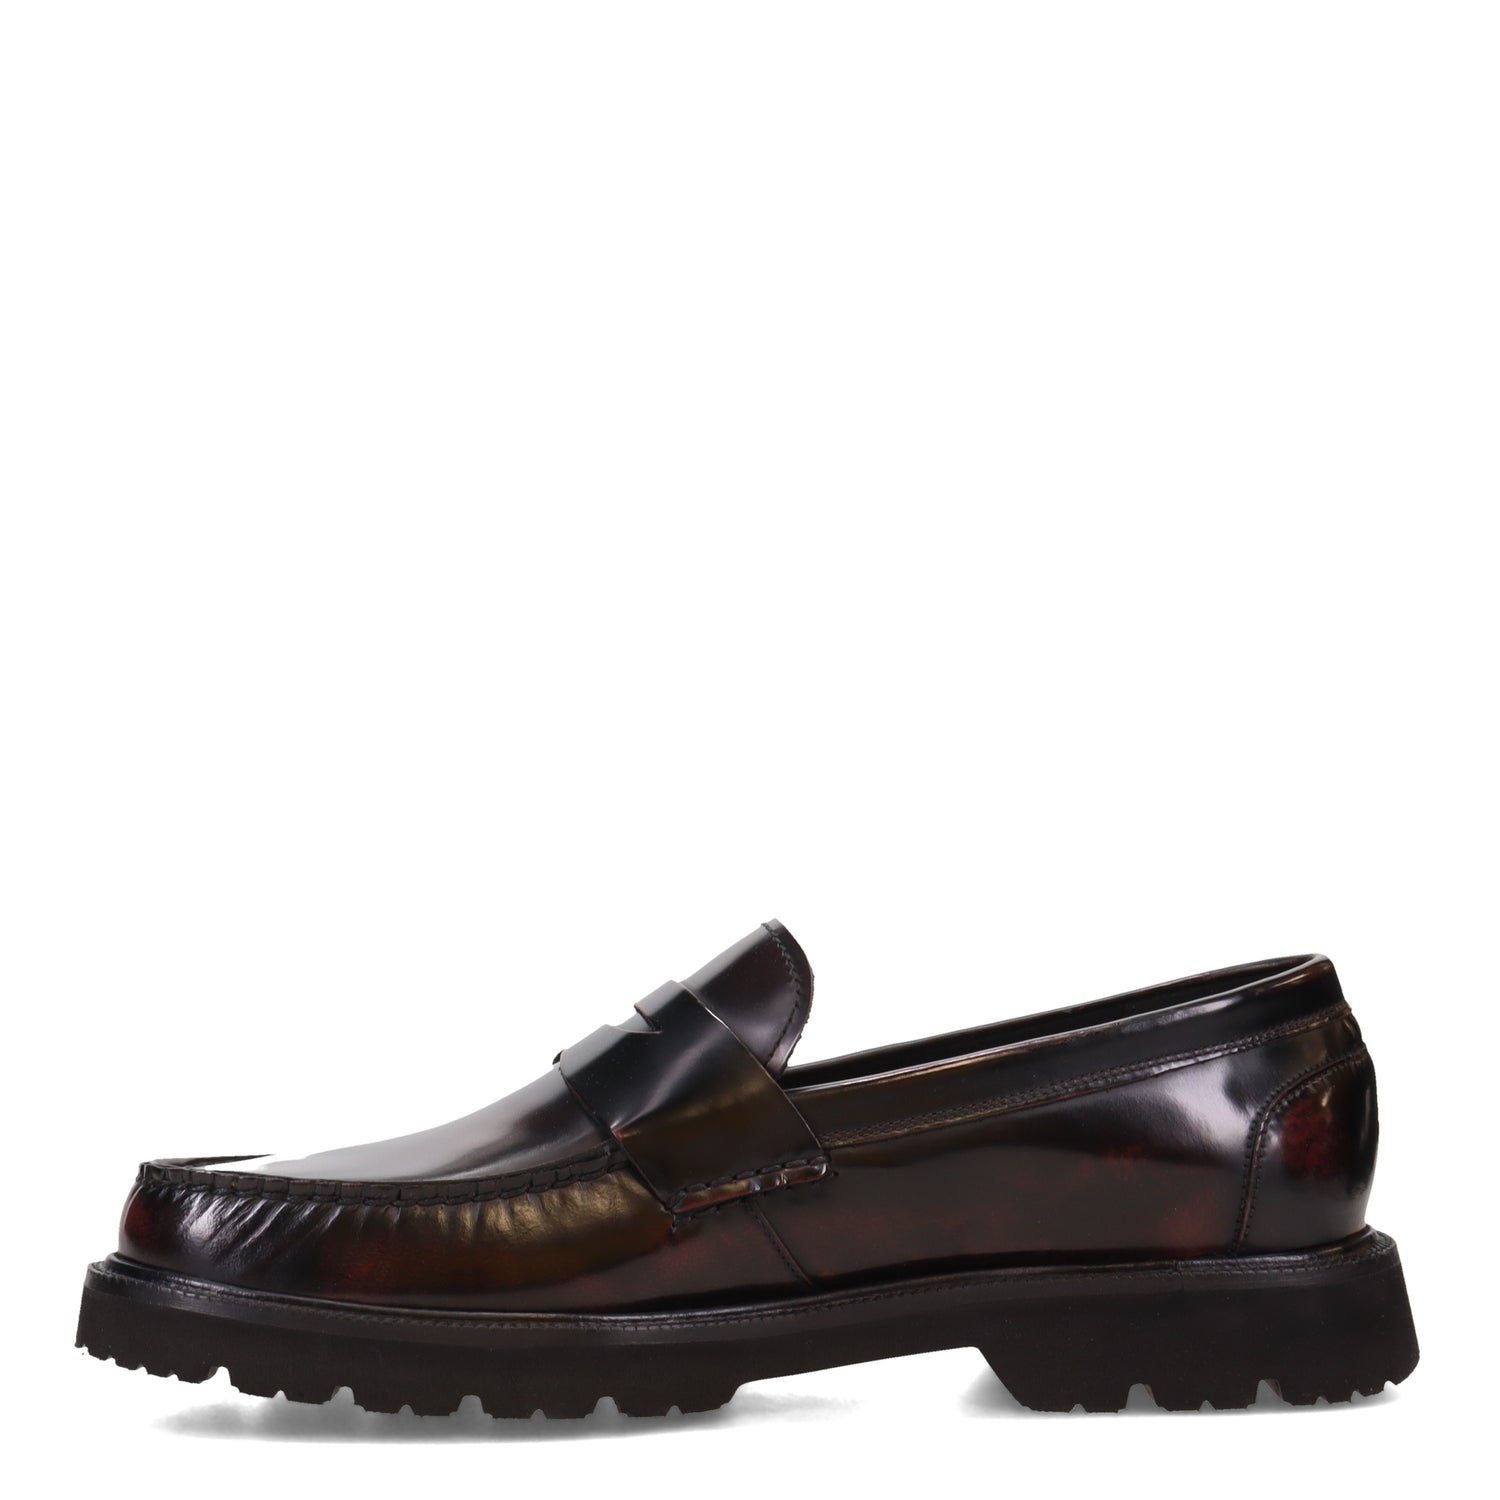 Peltz Shoes  Men's Cole Haan American Classics Penny Loafer BURGUNDY C36537